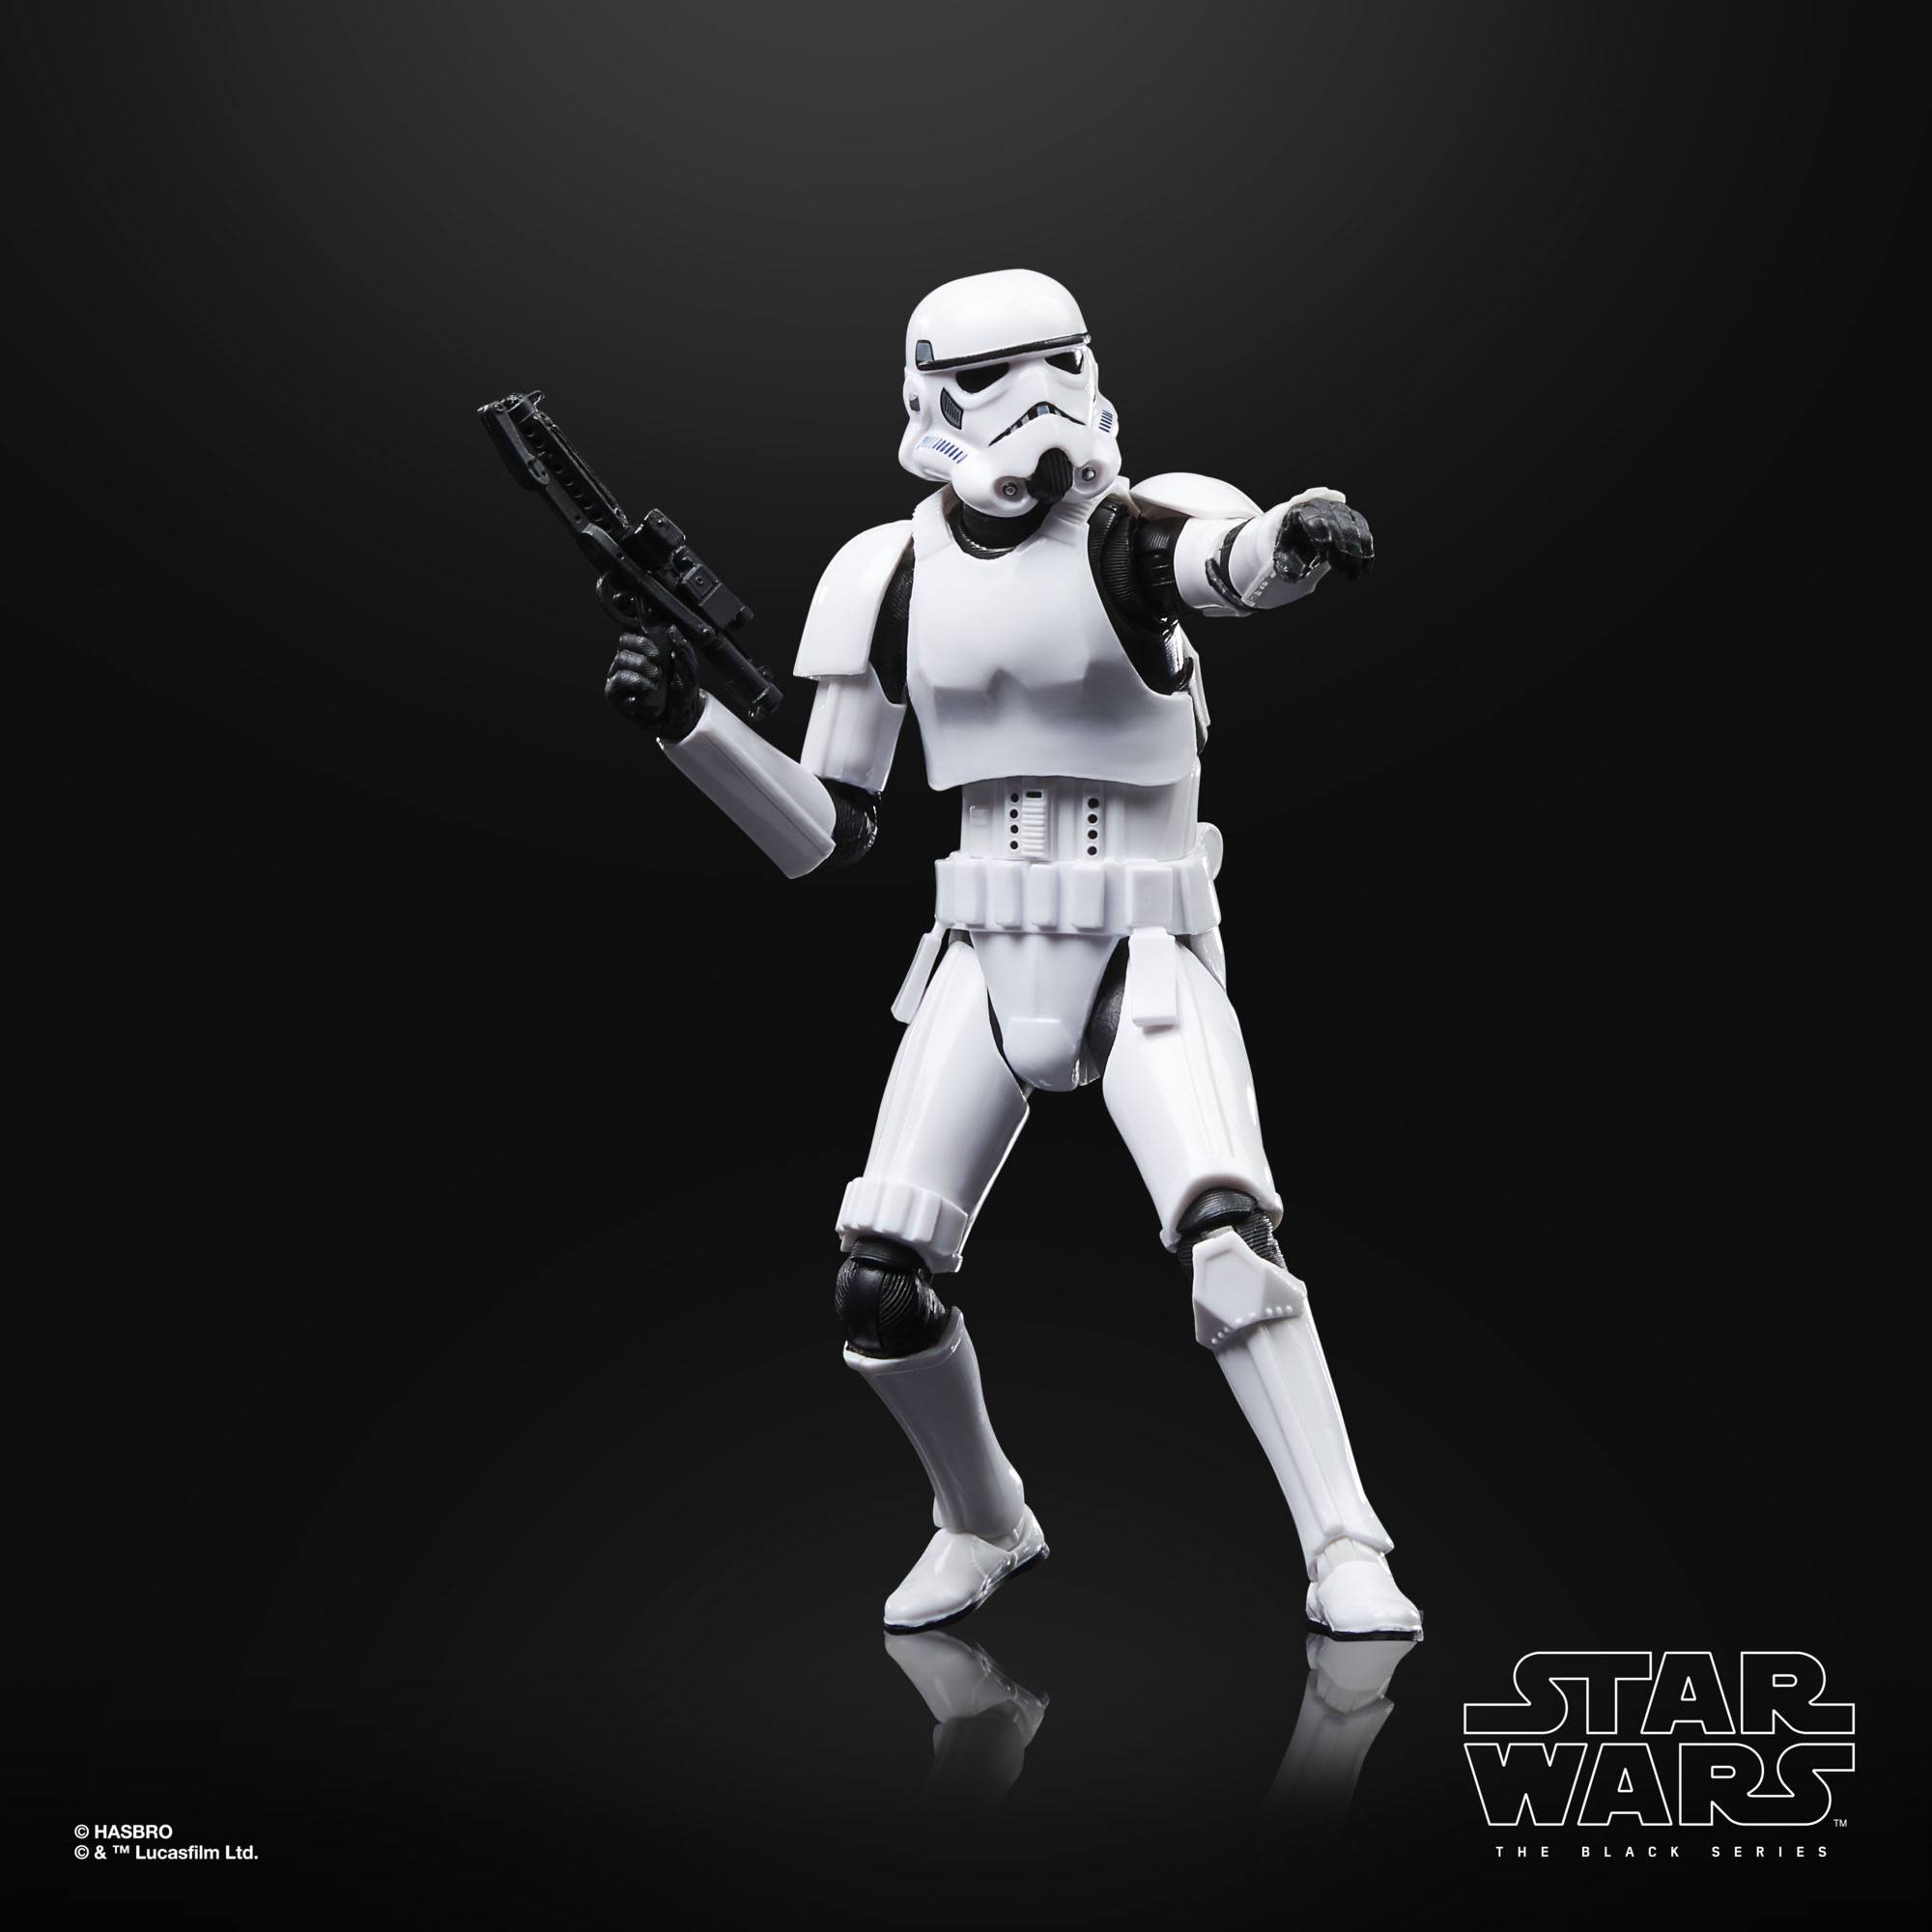 Star Wars Episode VI 40th Anniversary Black Series Actionfigur Stormtrooper 15 cm HASF7079 5010996135582